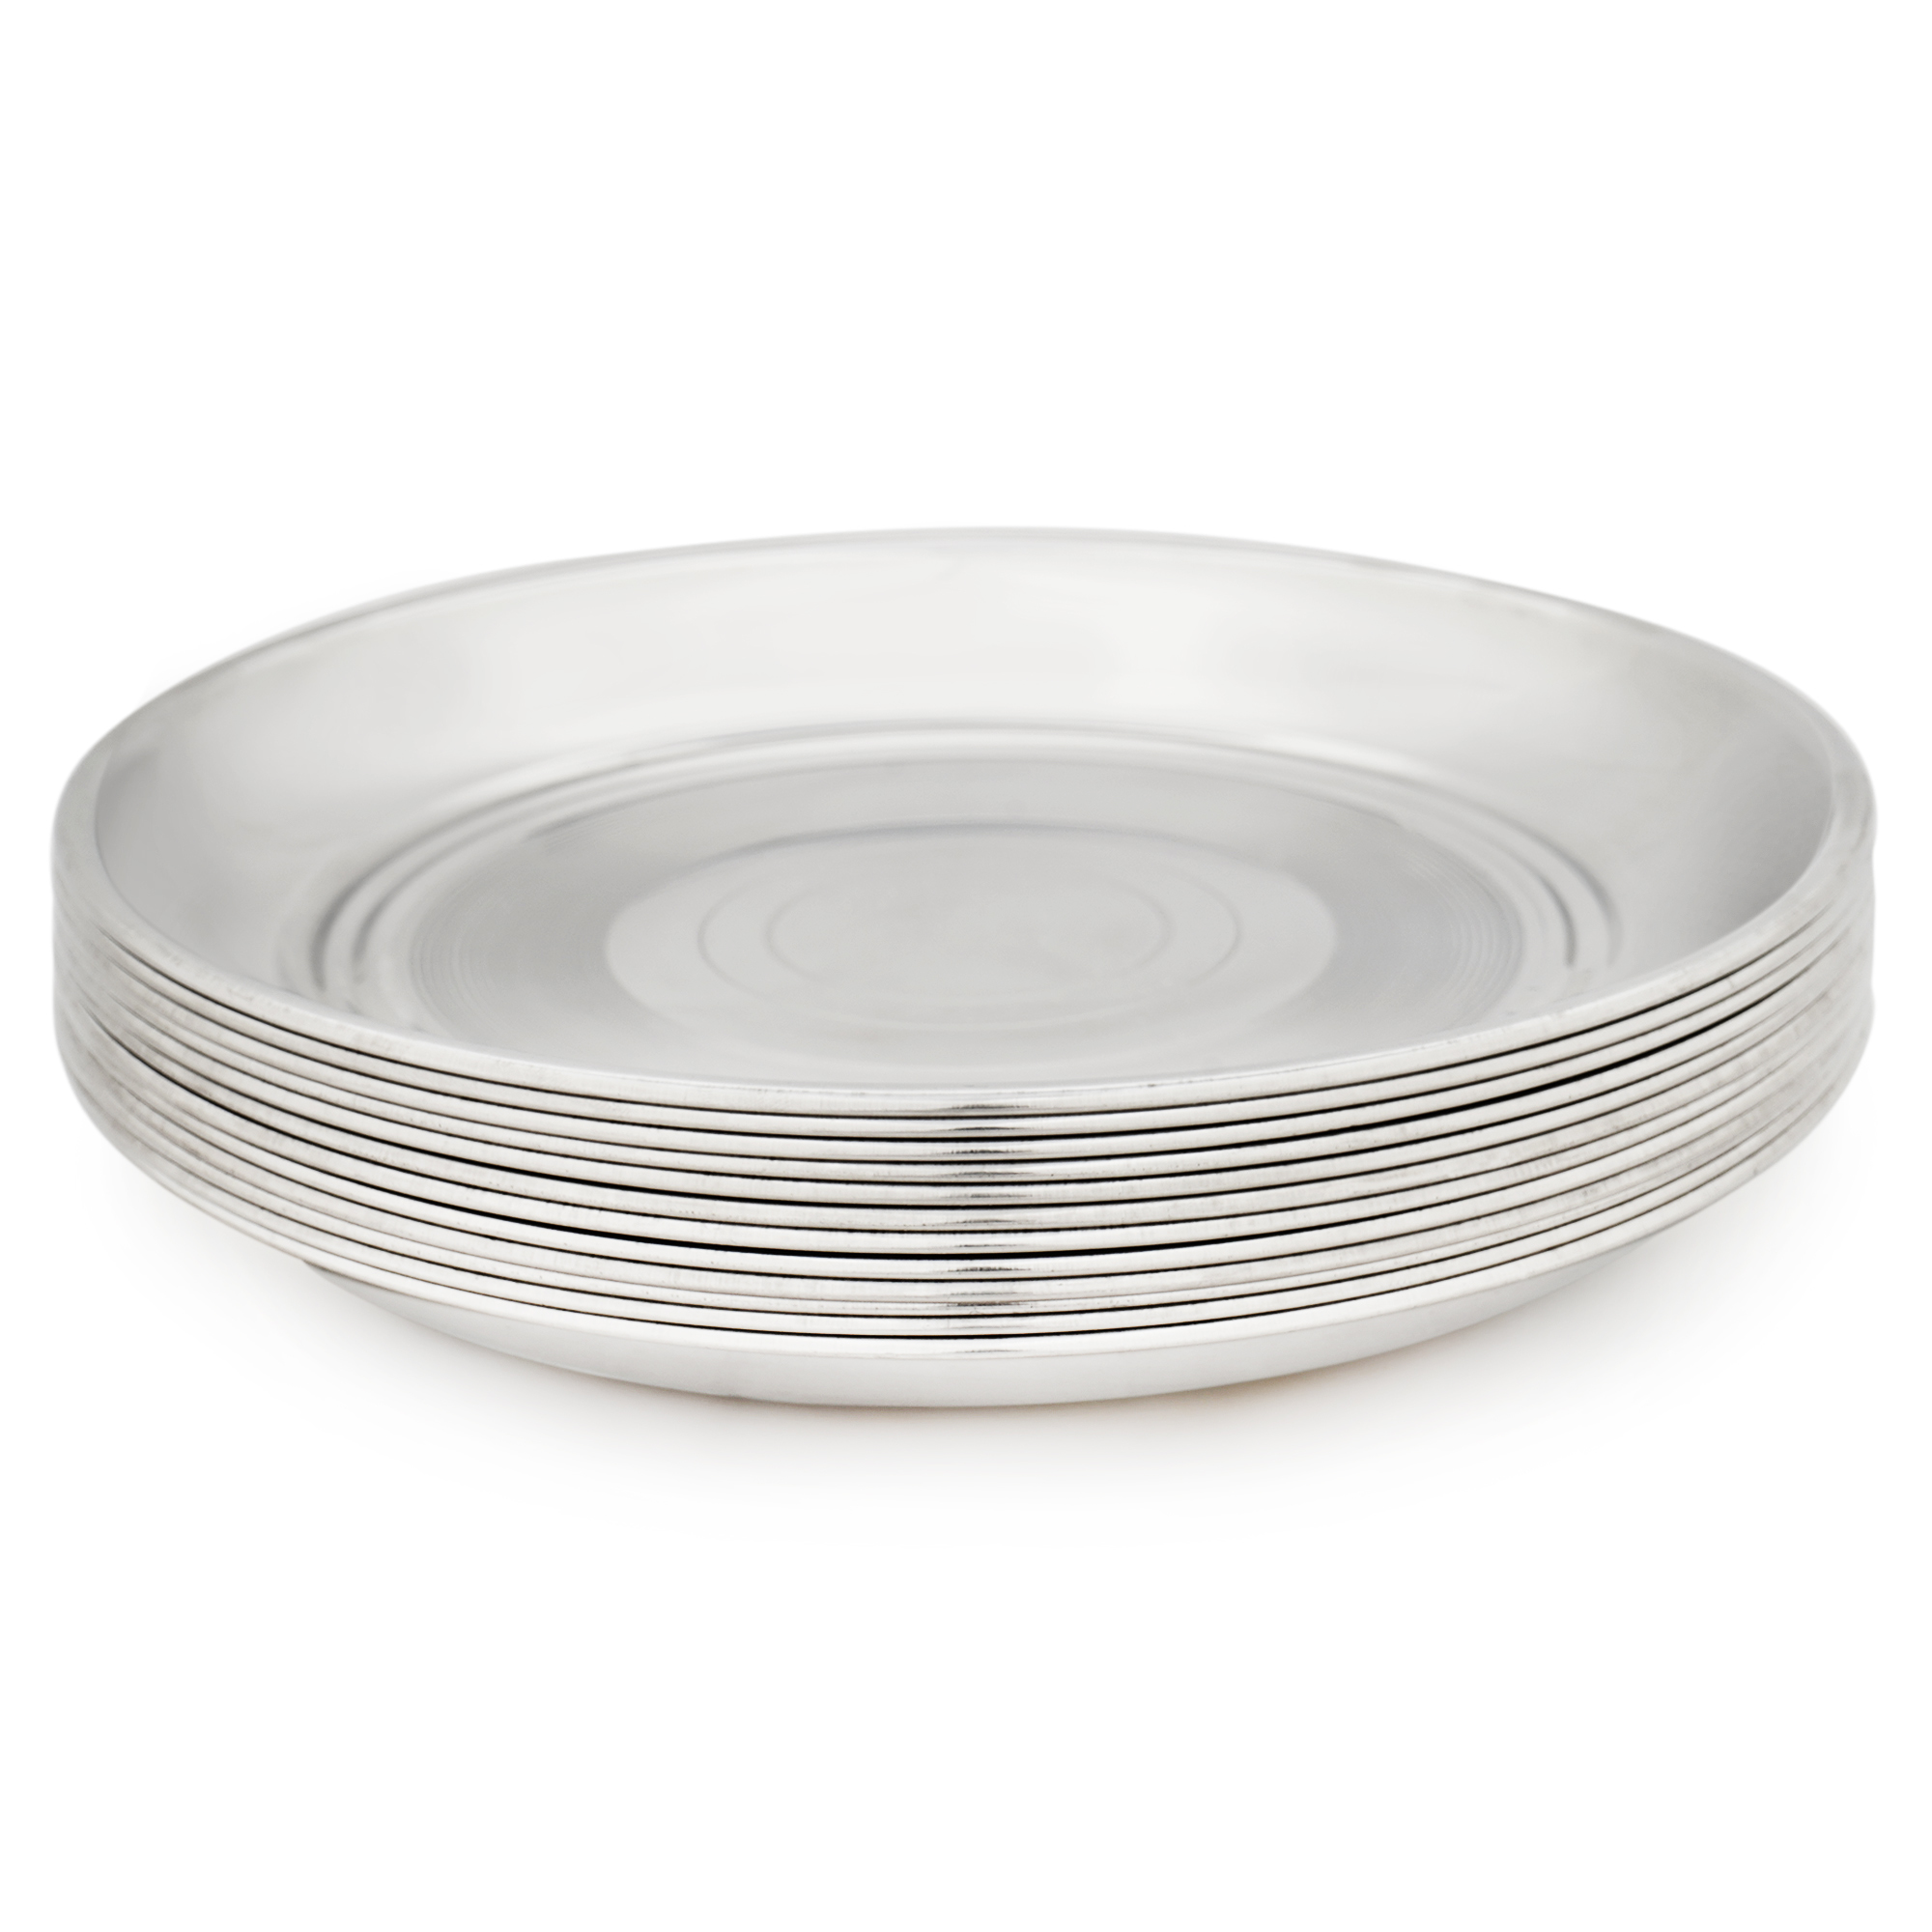 Stainless steel Dinner Plate